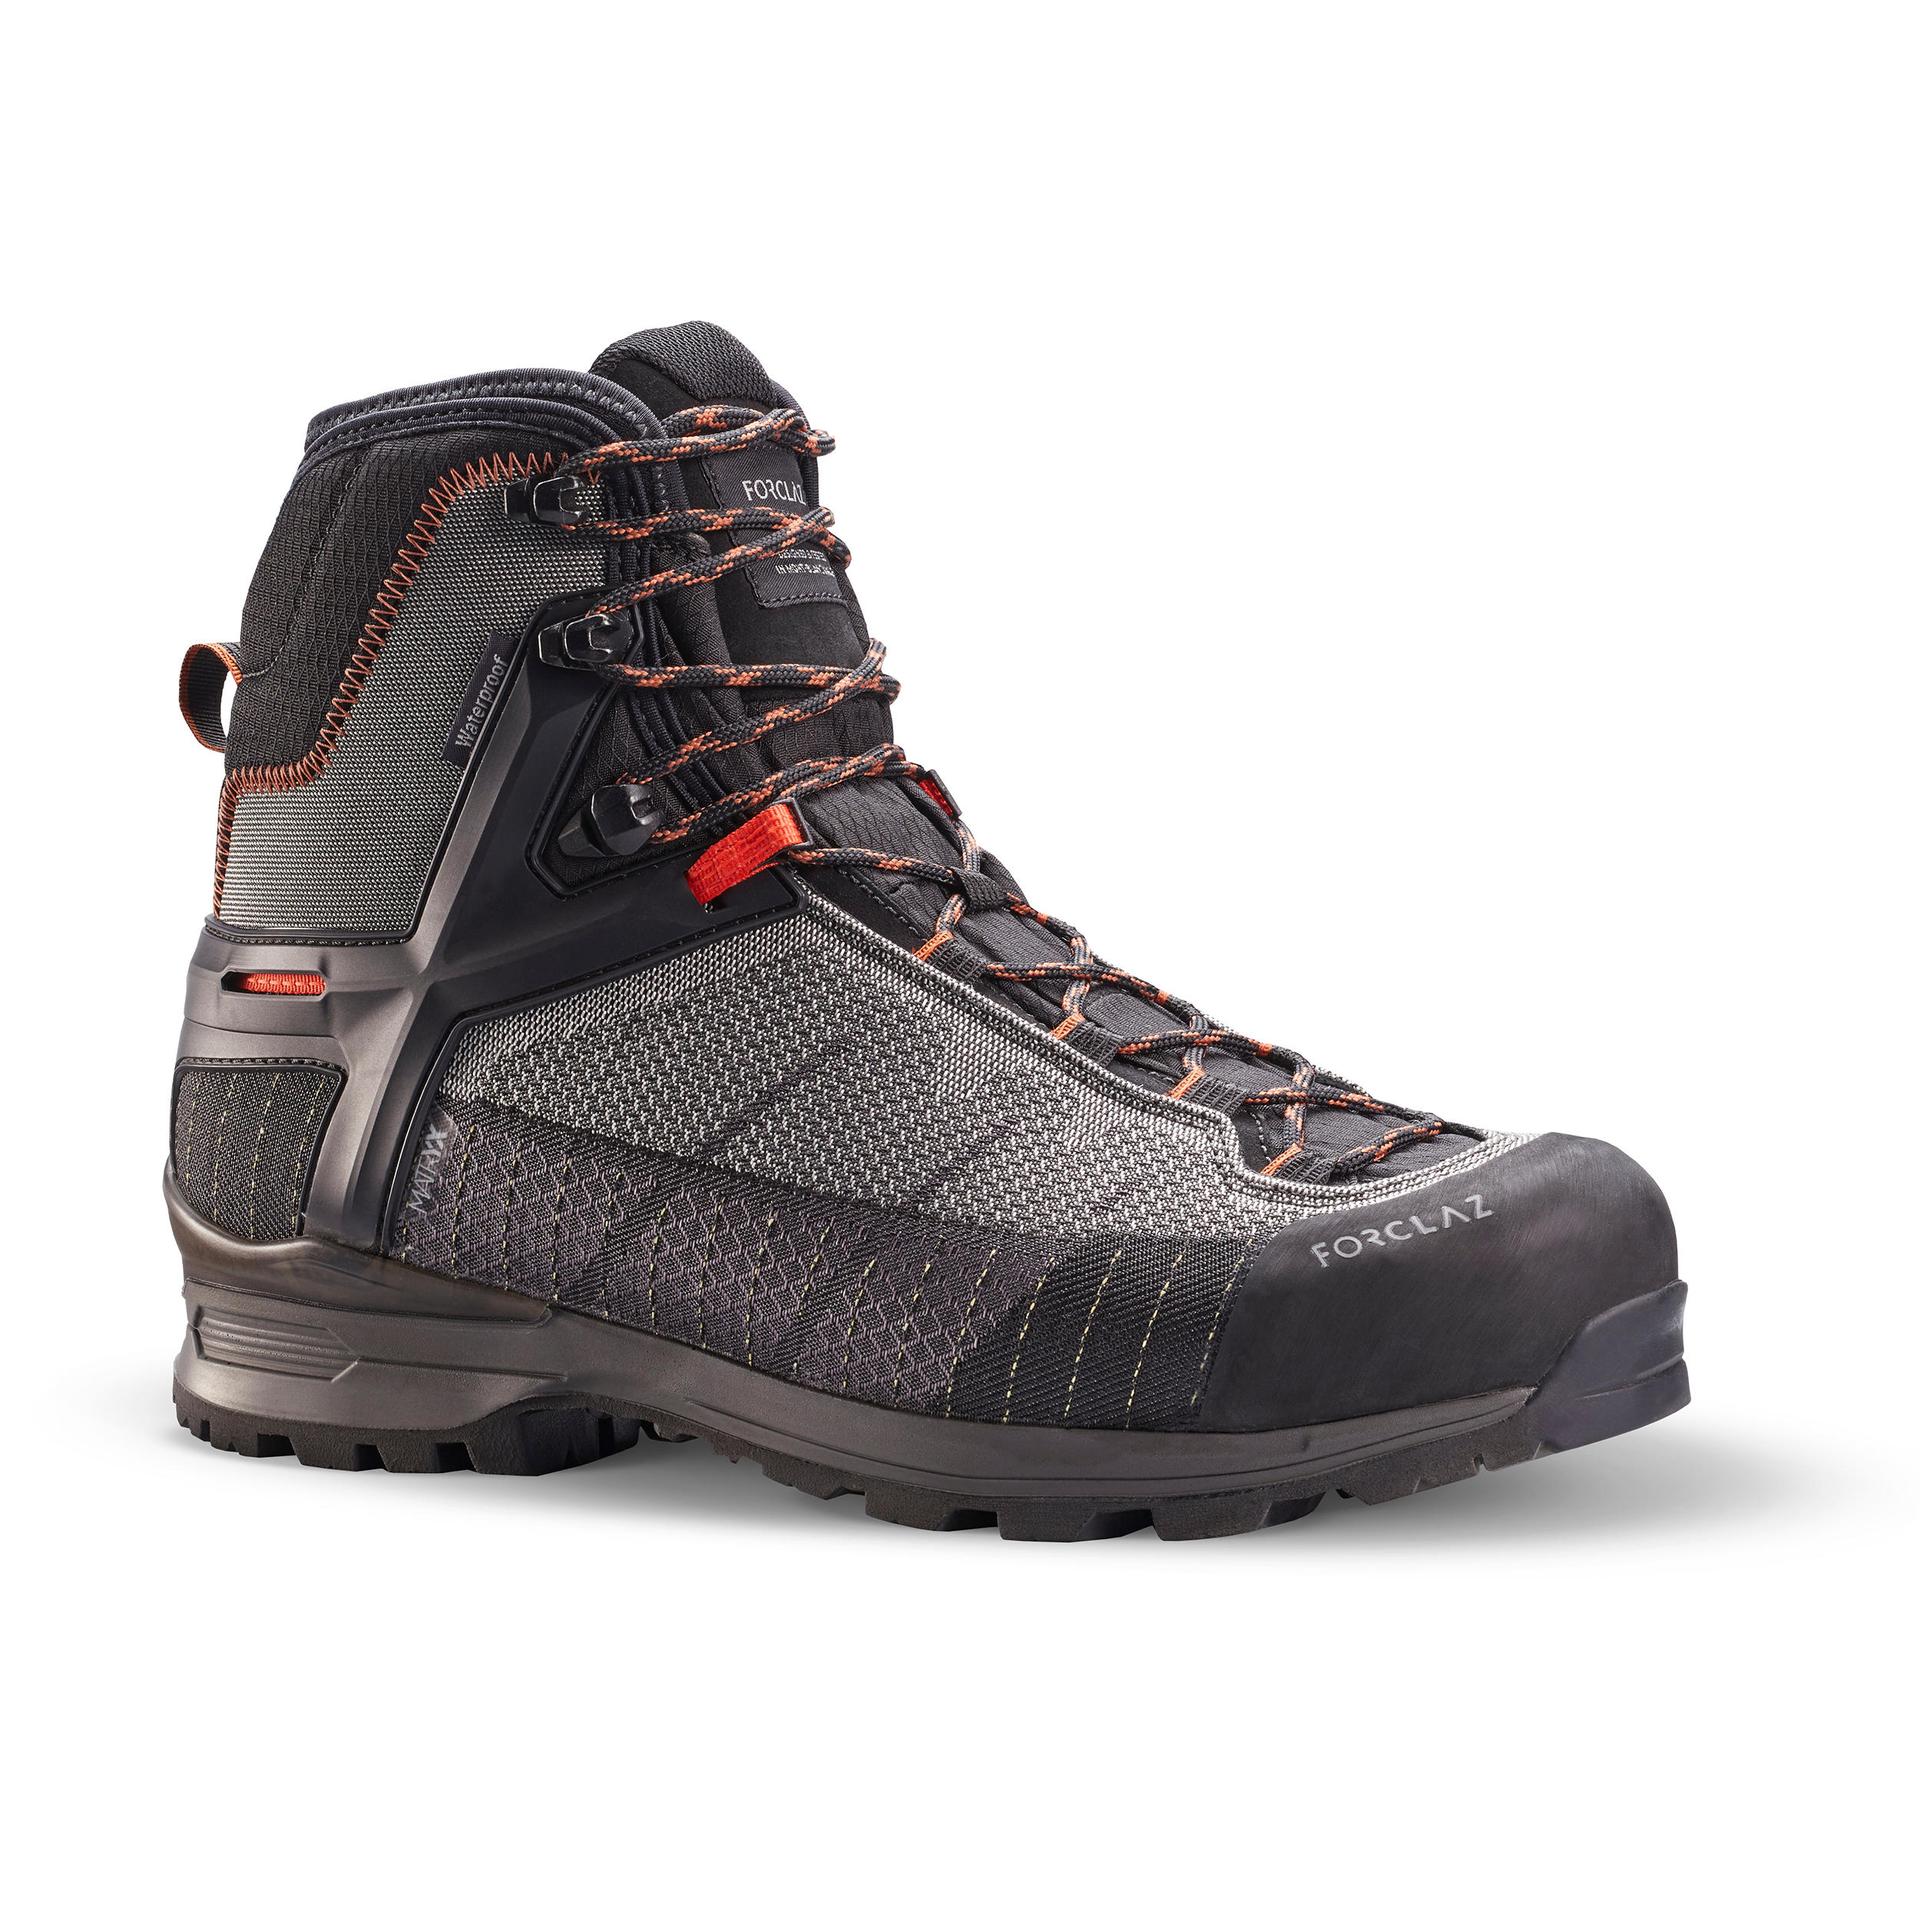 matryx waterproof trekking shoes - vibram - mt500 matryx - men's